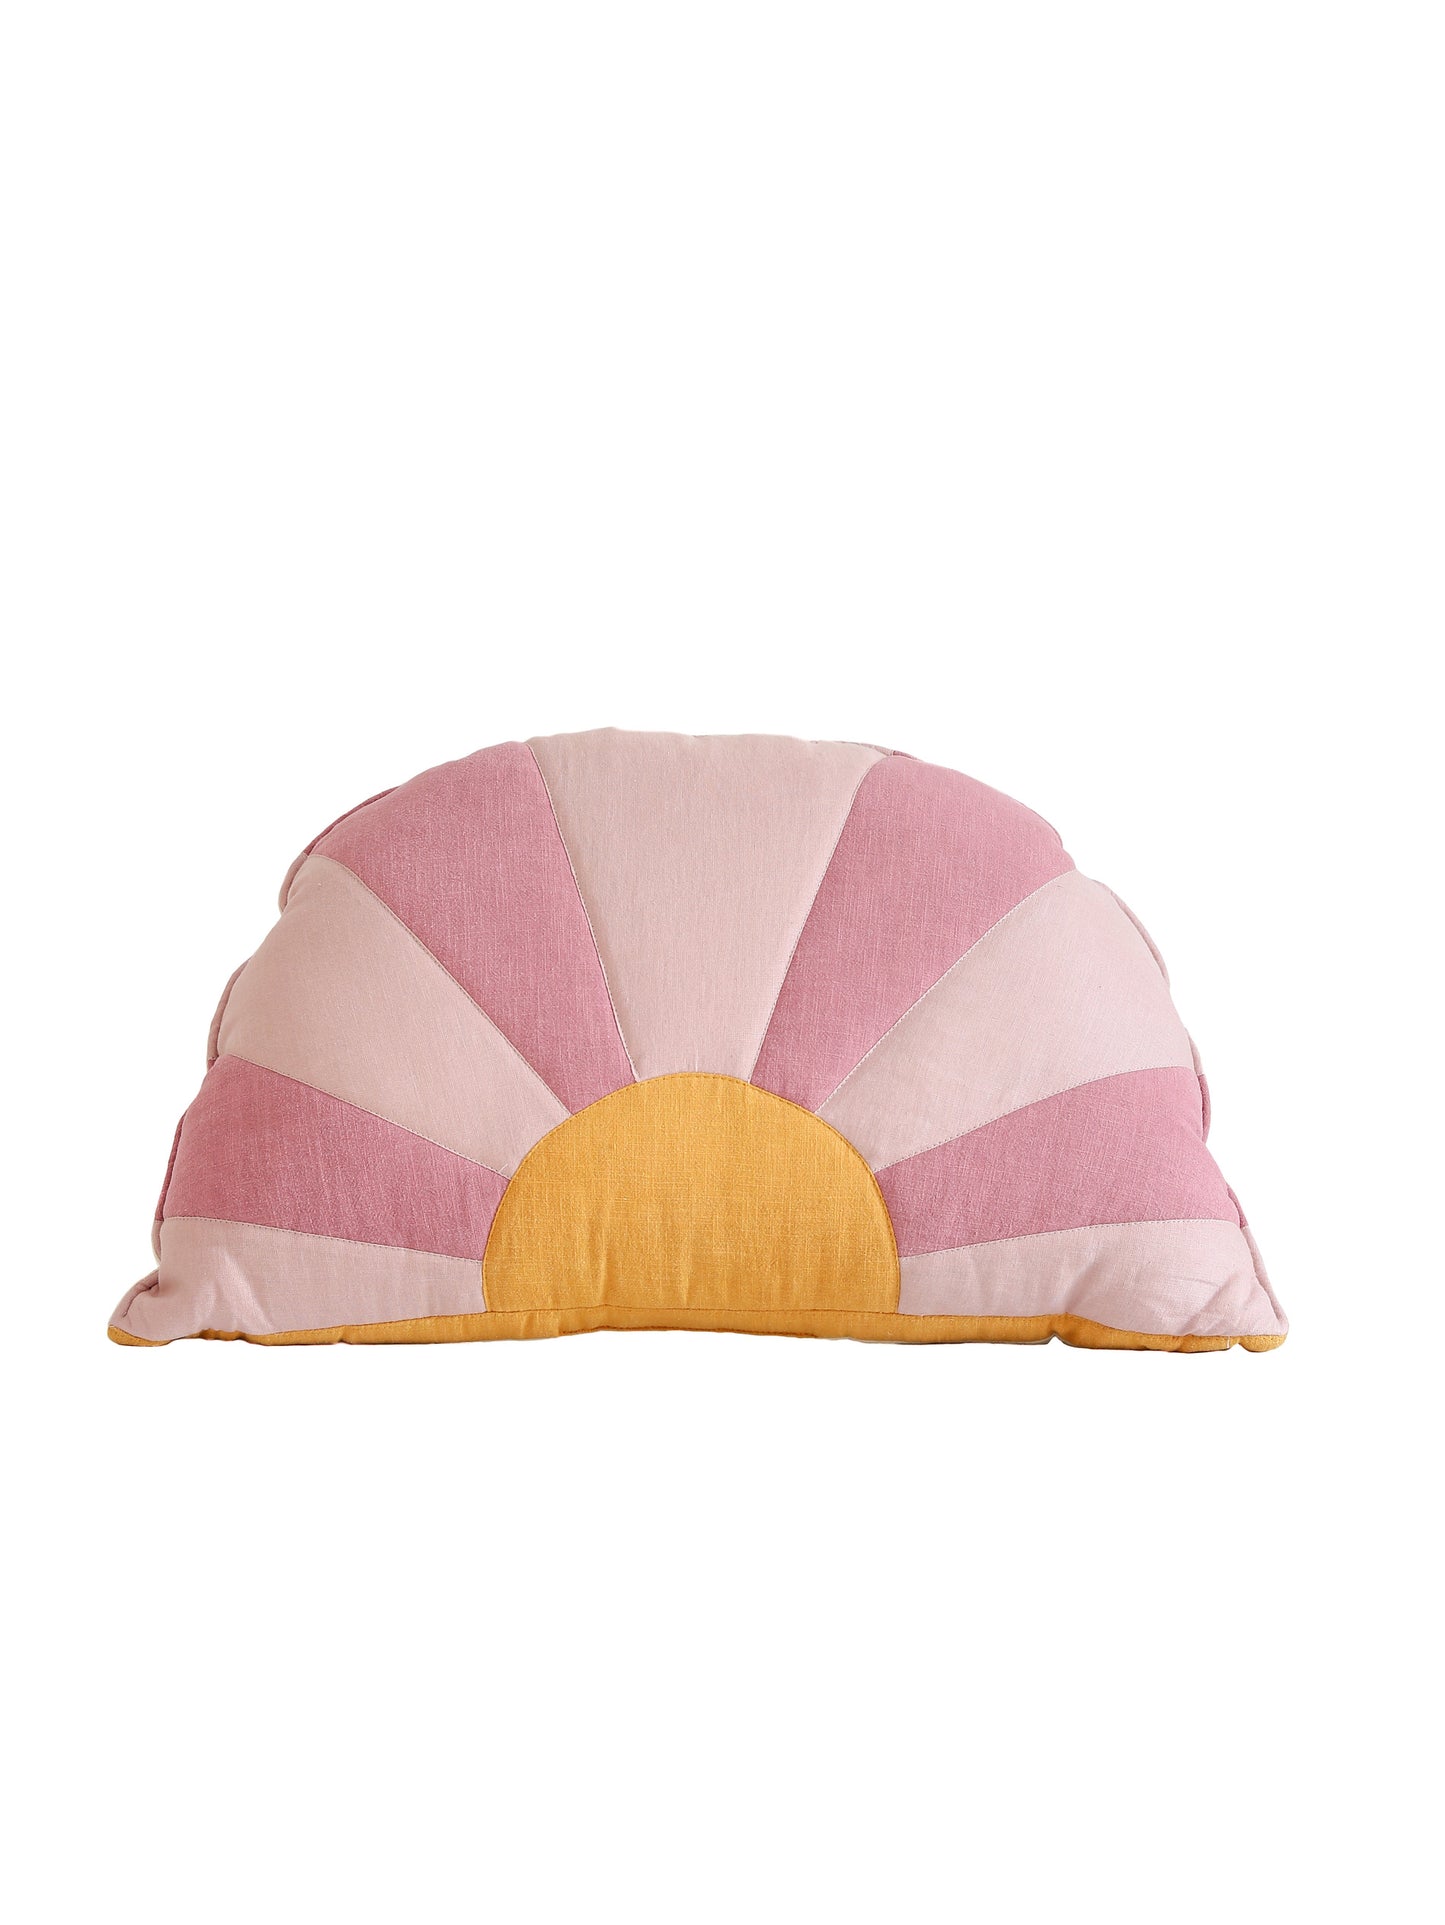 “Lazy Santa Cruz” Sun Pillow